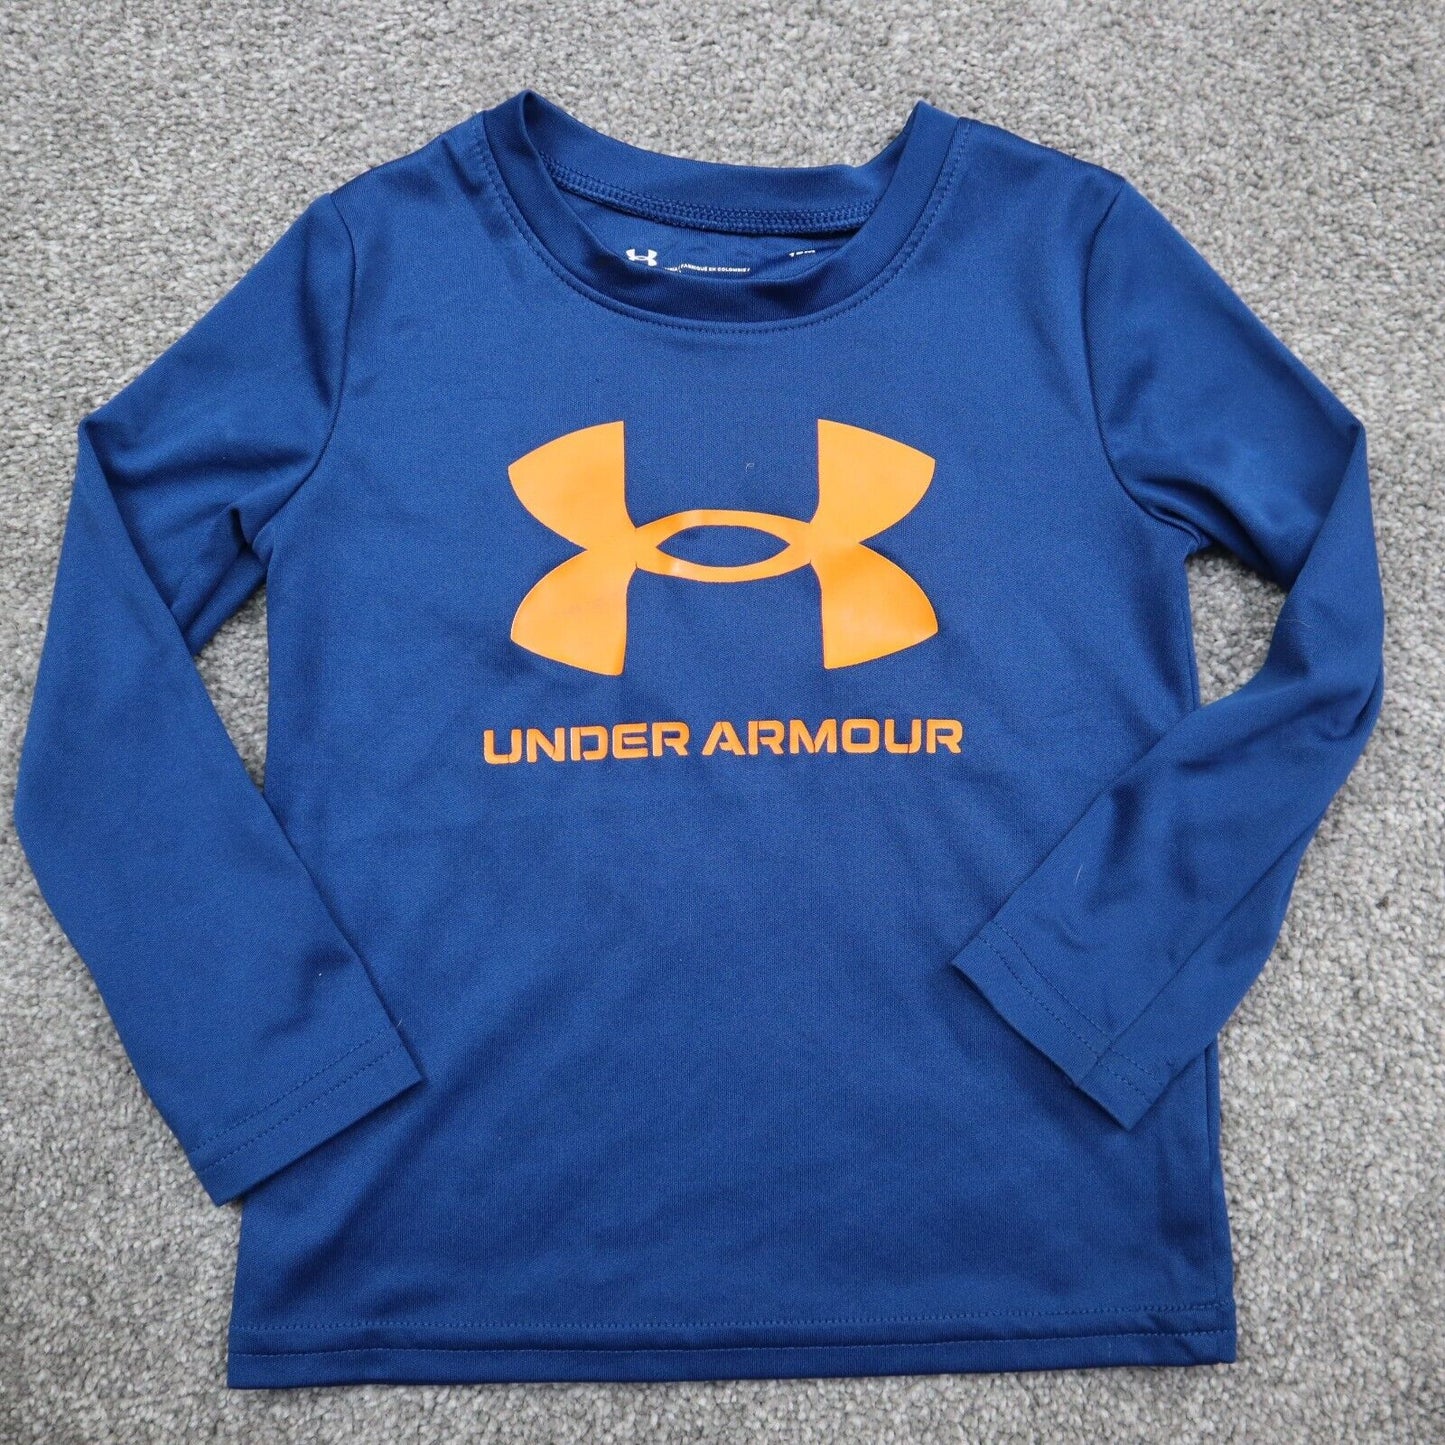 Under Armour Shirt Boy Size 18M Blue Long Sleeve Shirt Top Big Logo Crew Neck